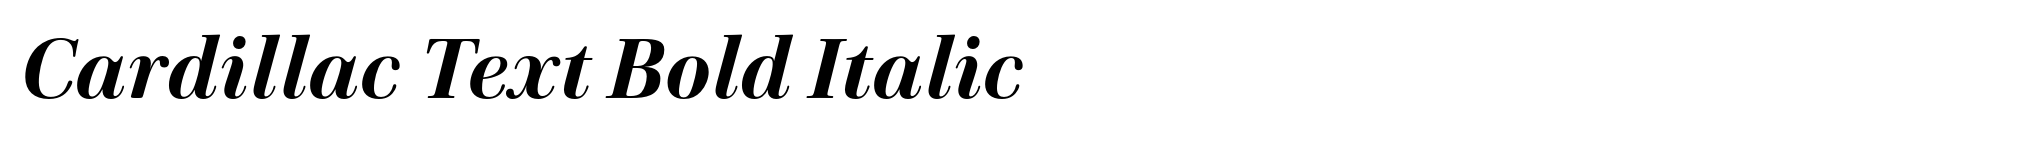 Cardillac Text Bold Italic image